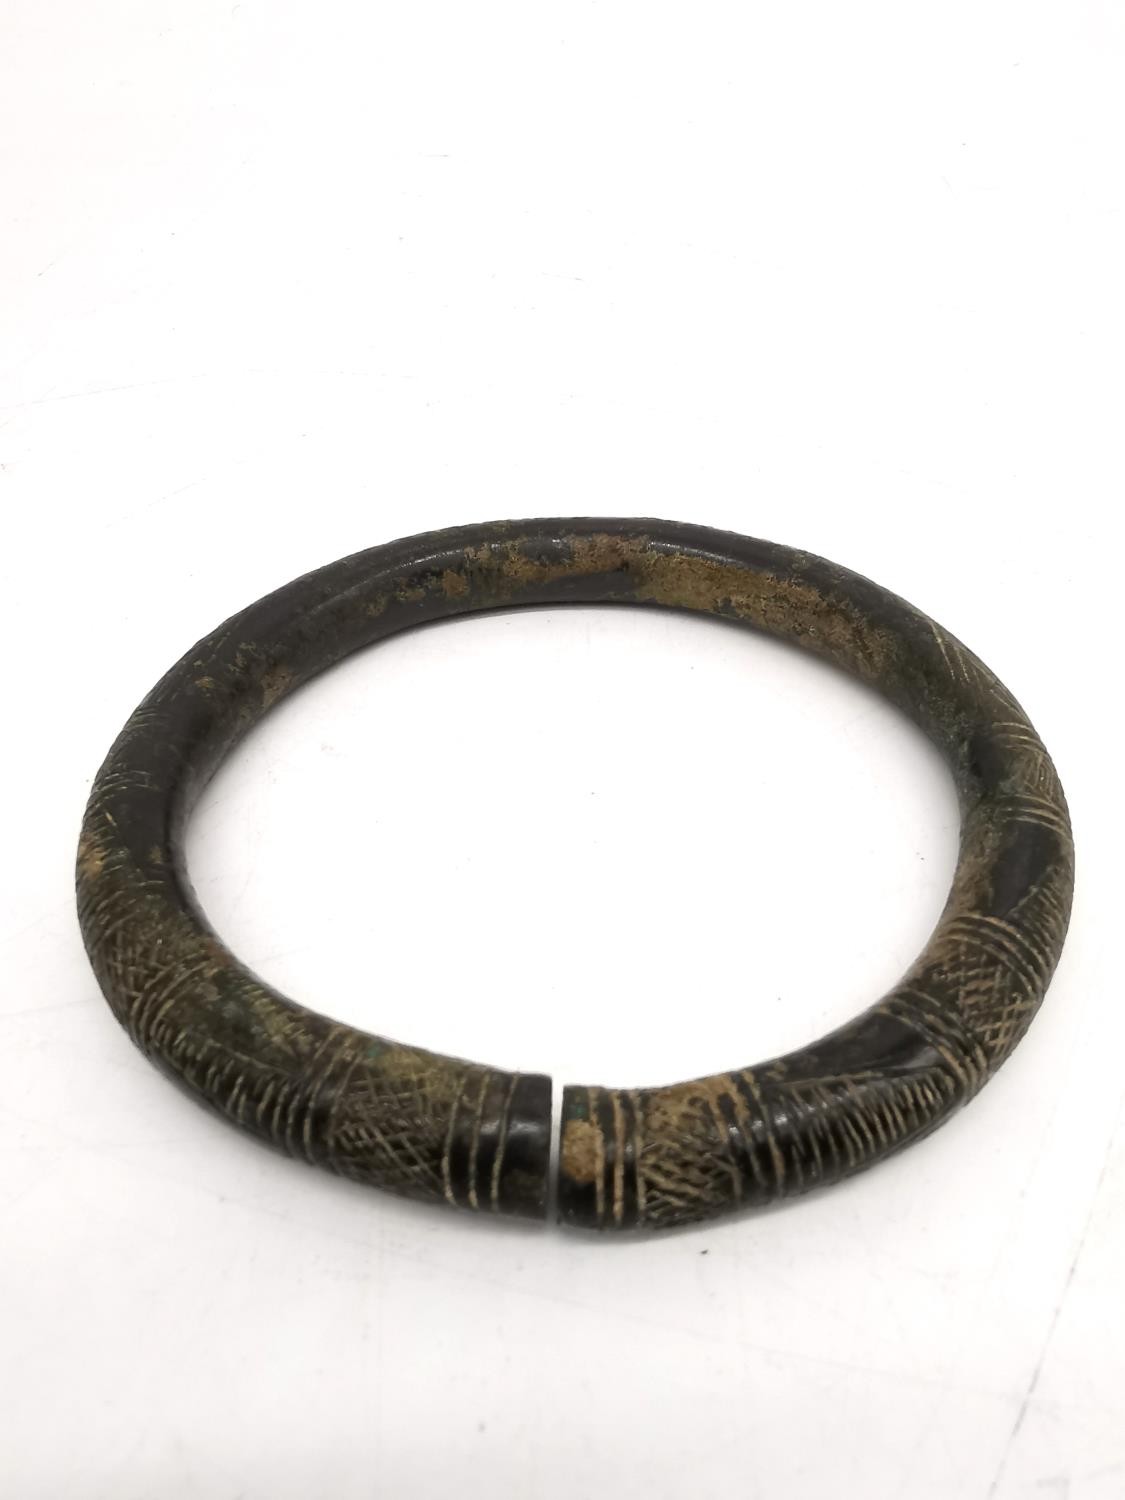 An ancient Iranian bronze torque arm bracelet/necklace with incised design. Diameter 12cm, - Image 3 of 6